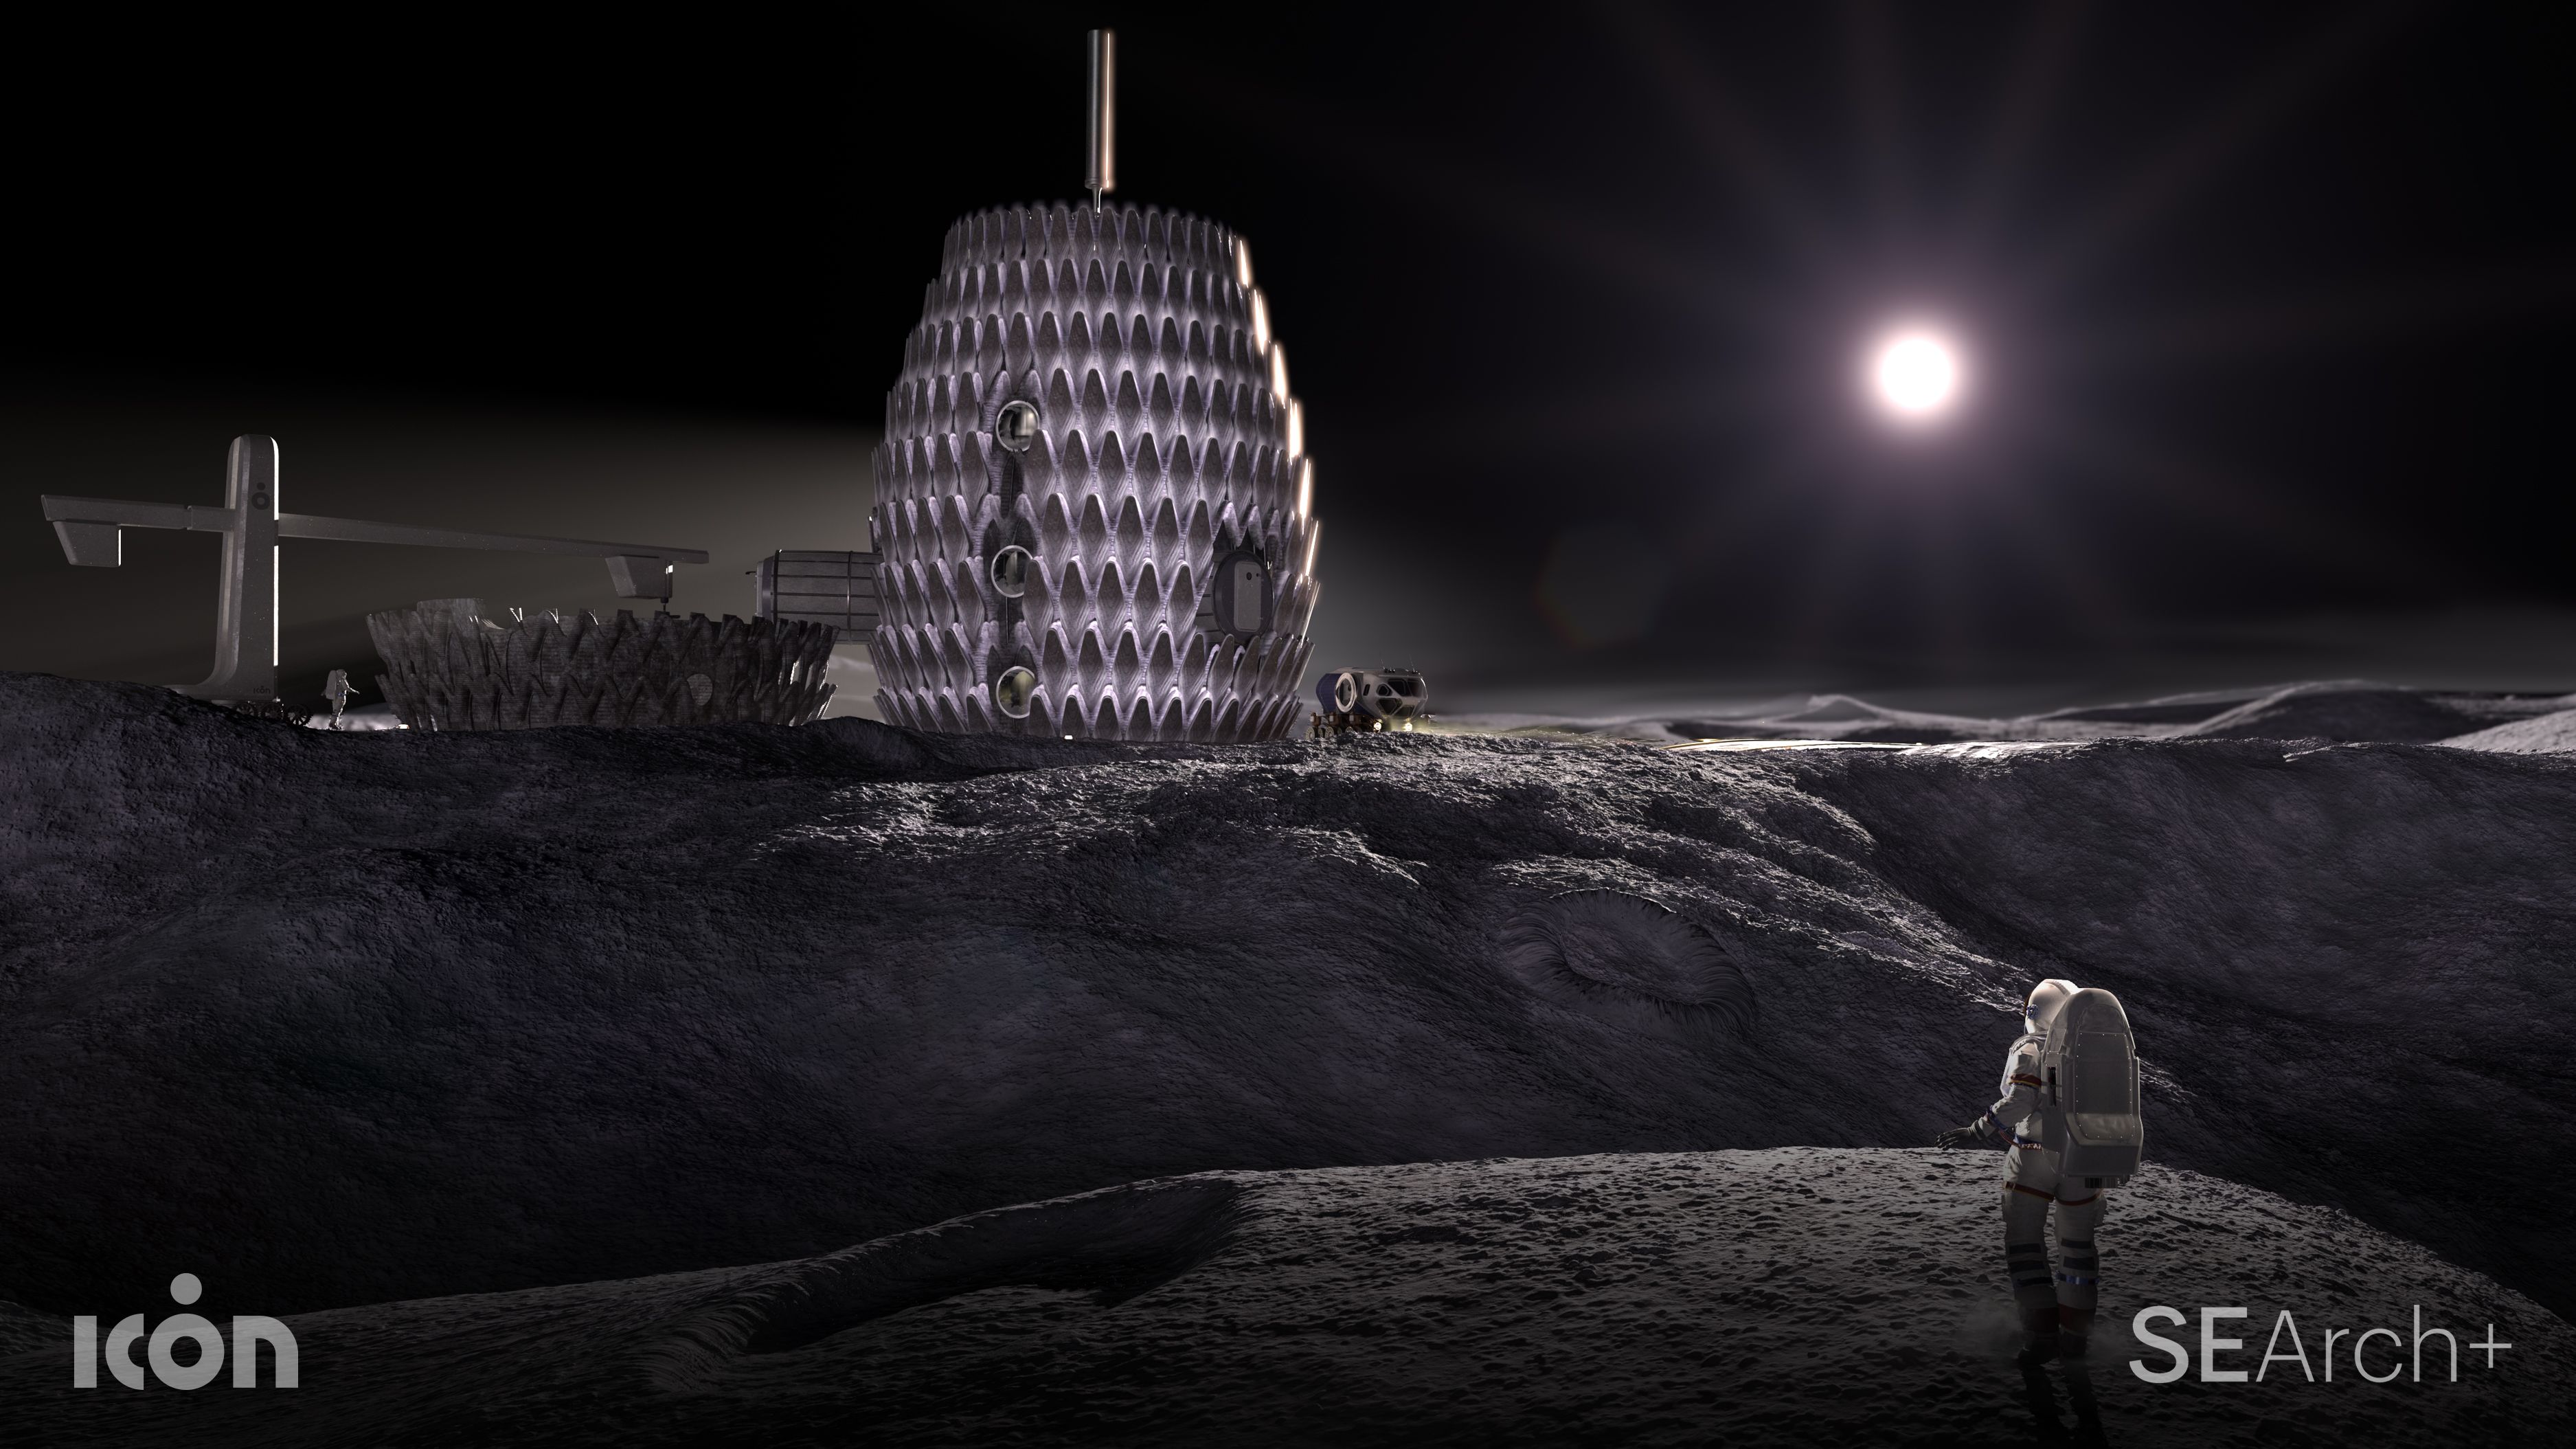 3D Printing on the Moon, Lunar Base